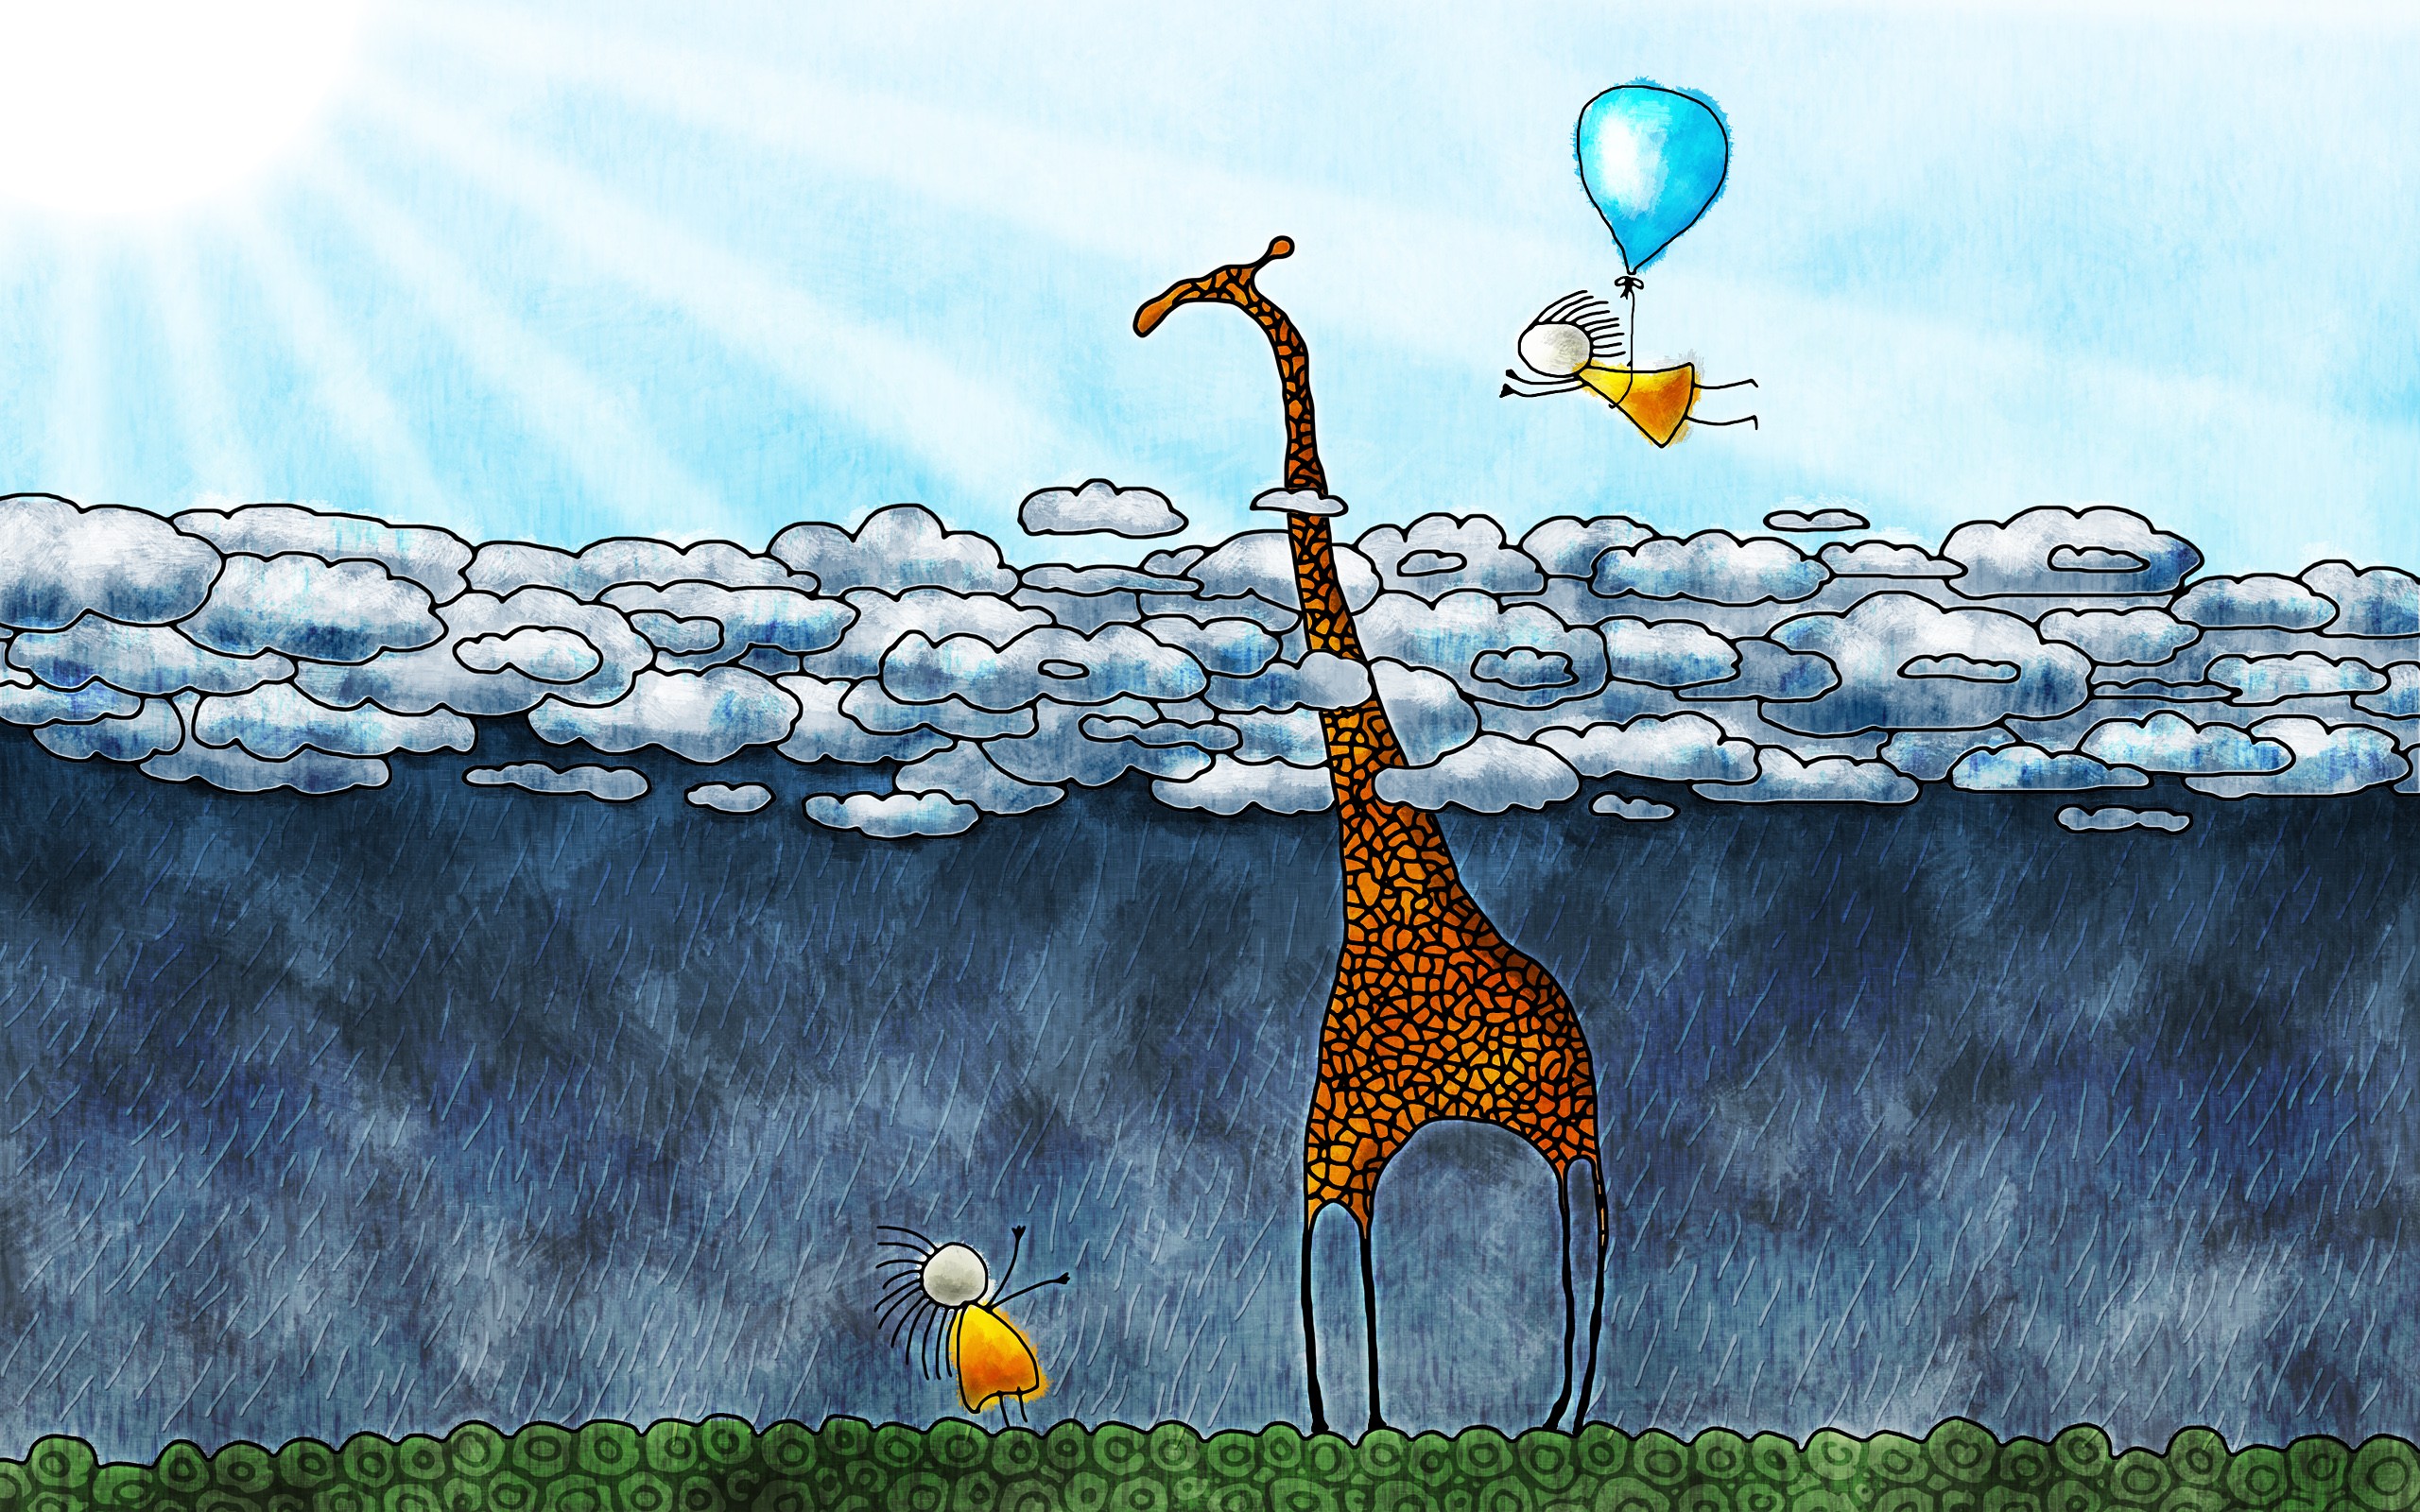 General 2560x1600 artwork anime clouds balloon giraffes rain nature animals Vladstudio children sun rays drawing flying Sun fantasy art